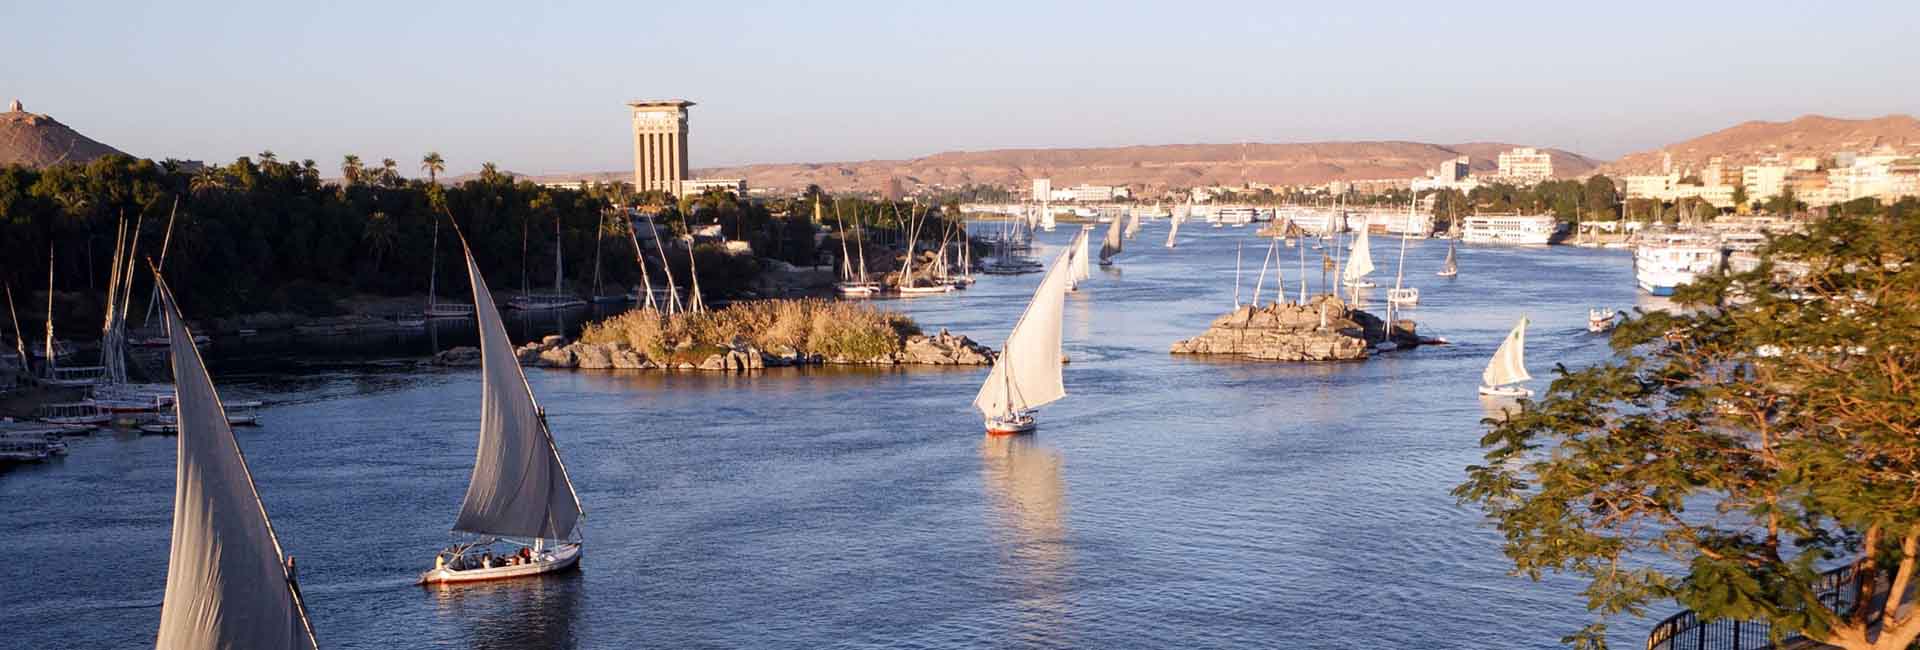 Aswan Short Break